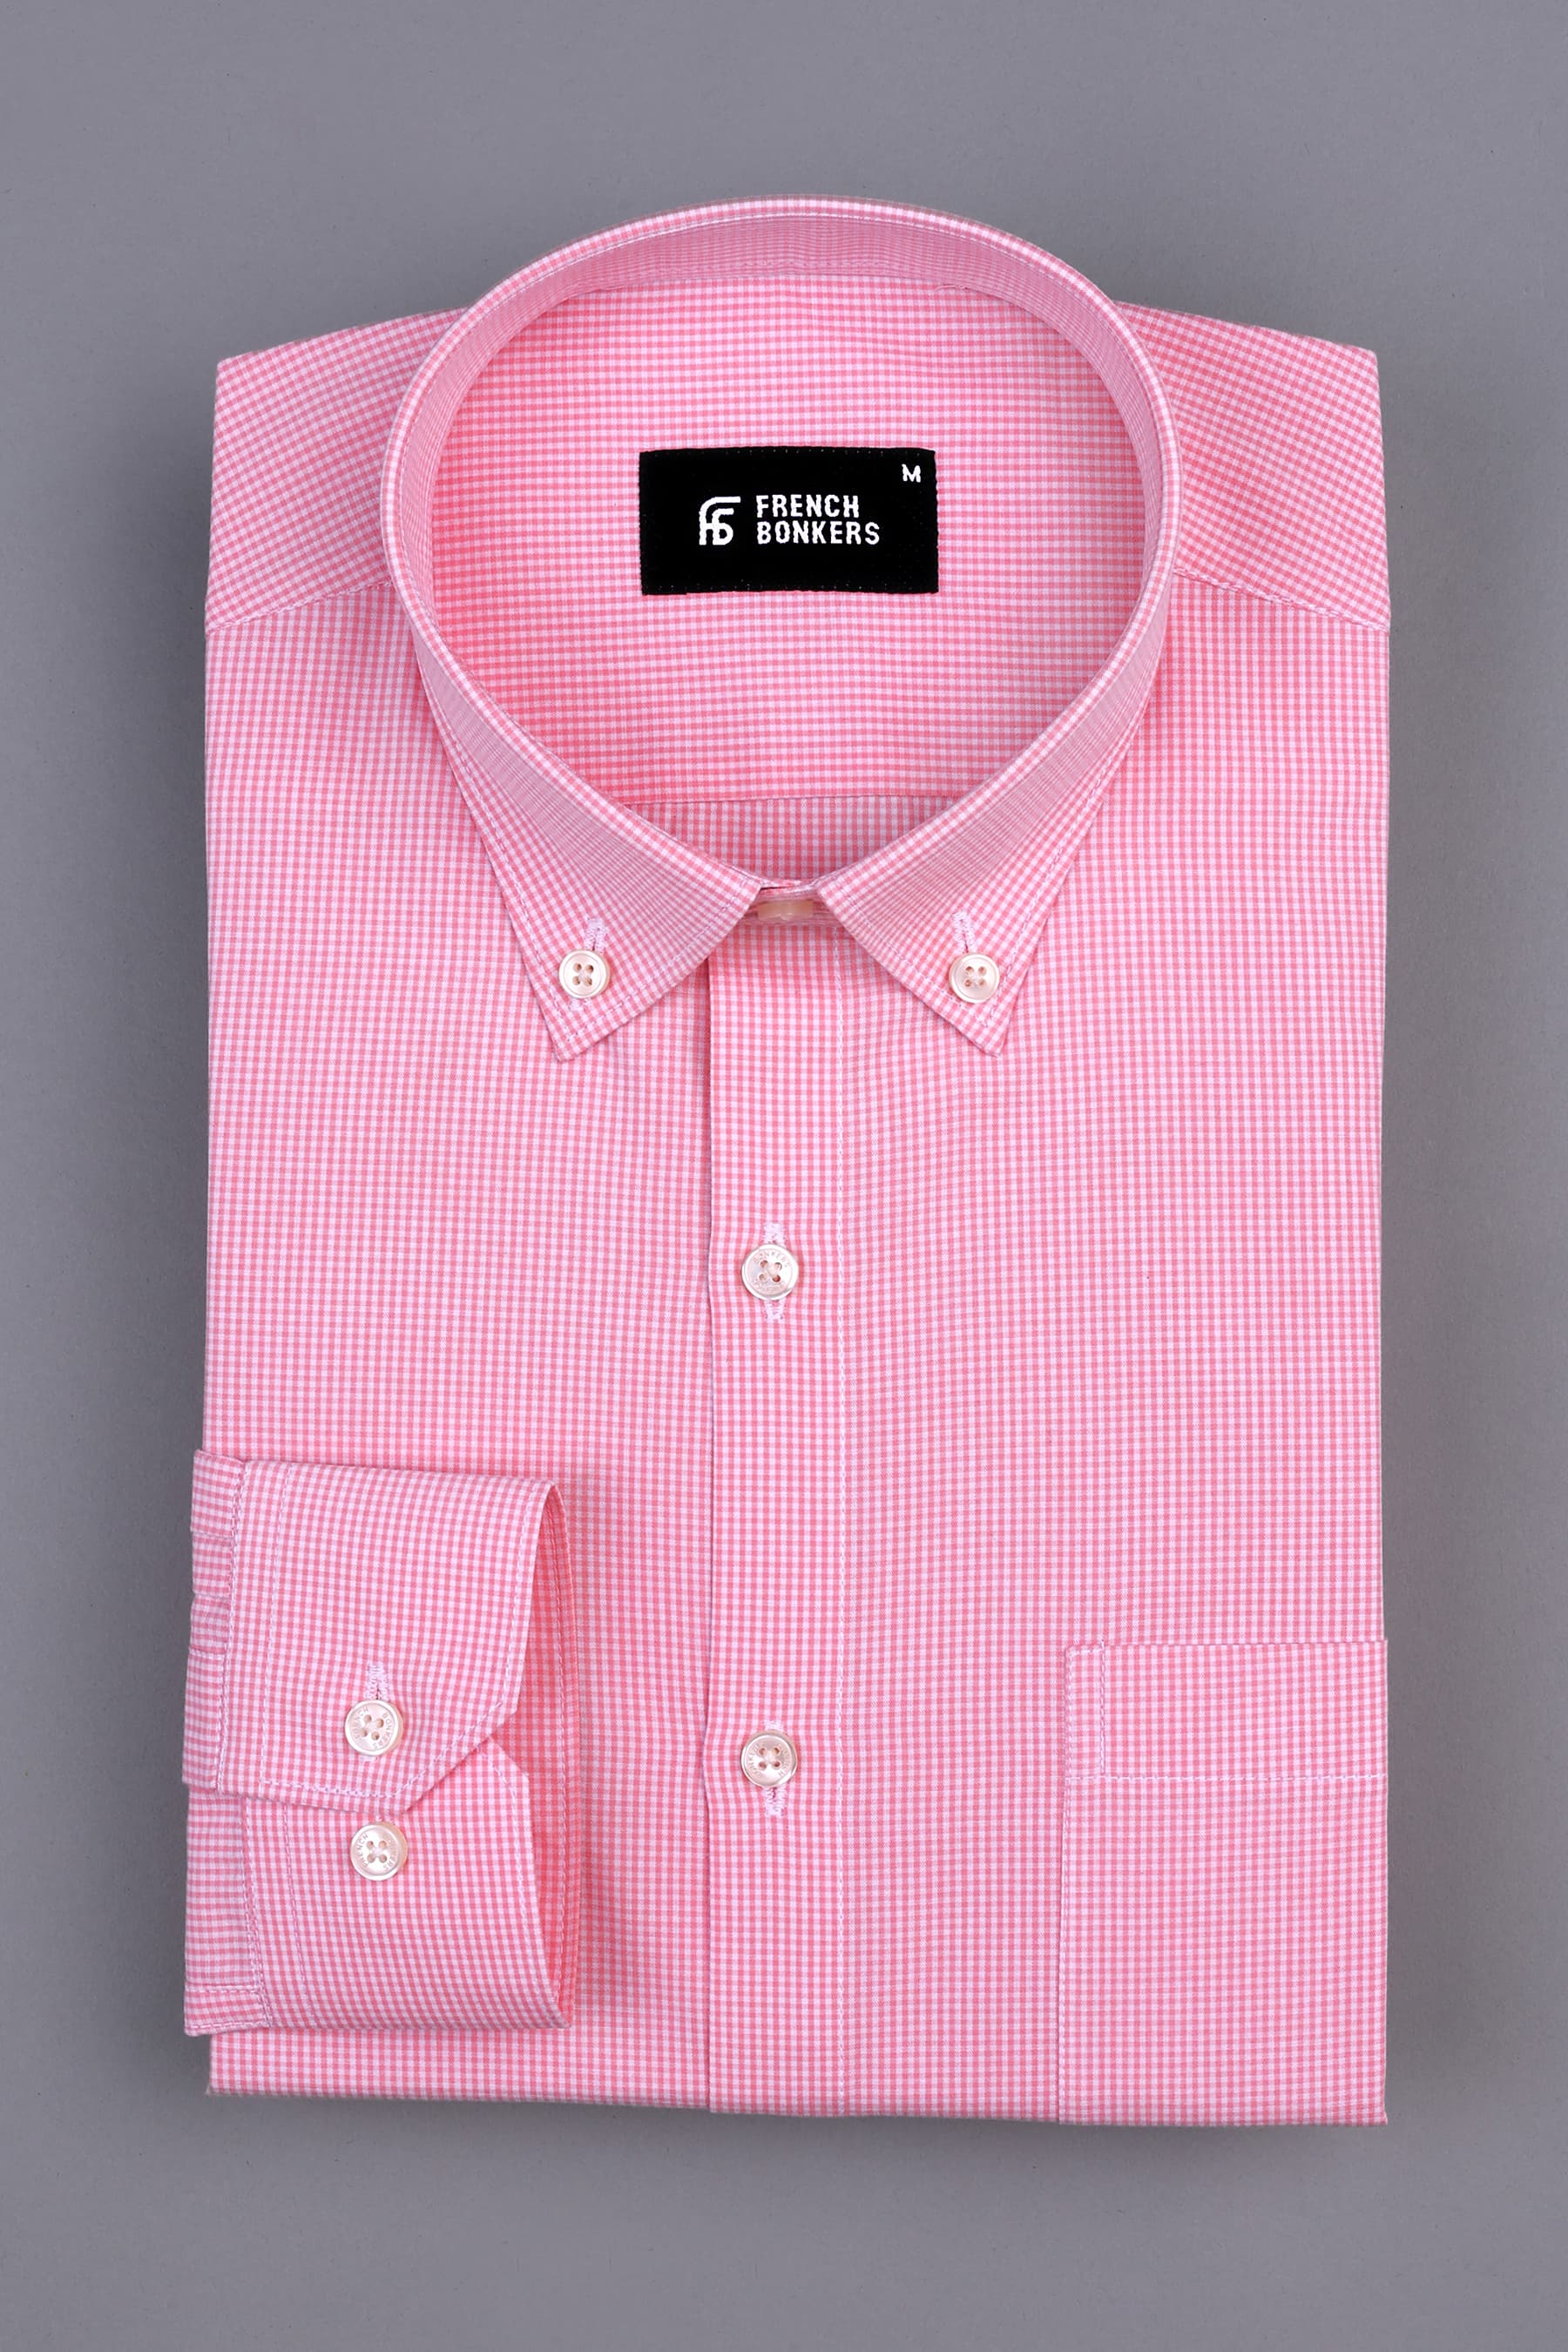 Watermalon pink with white mini micro check shirt